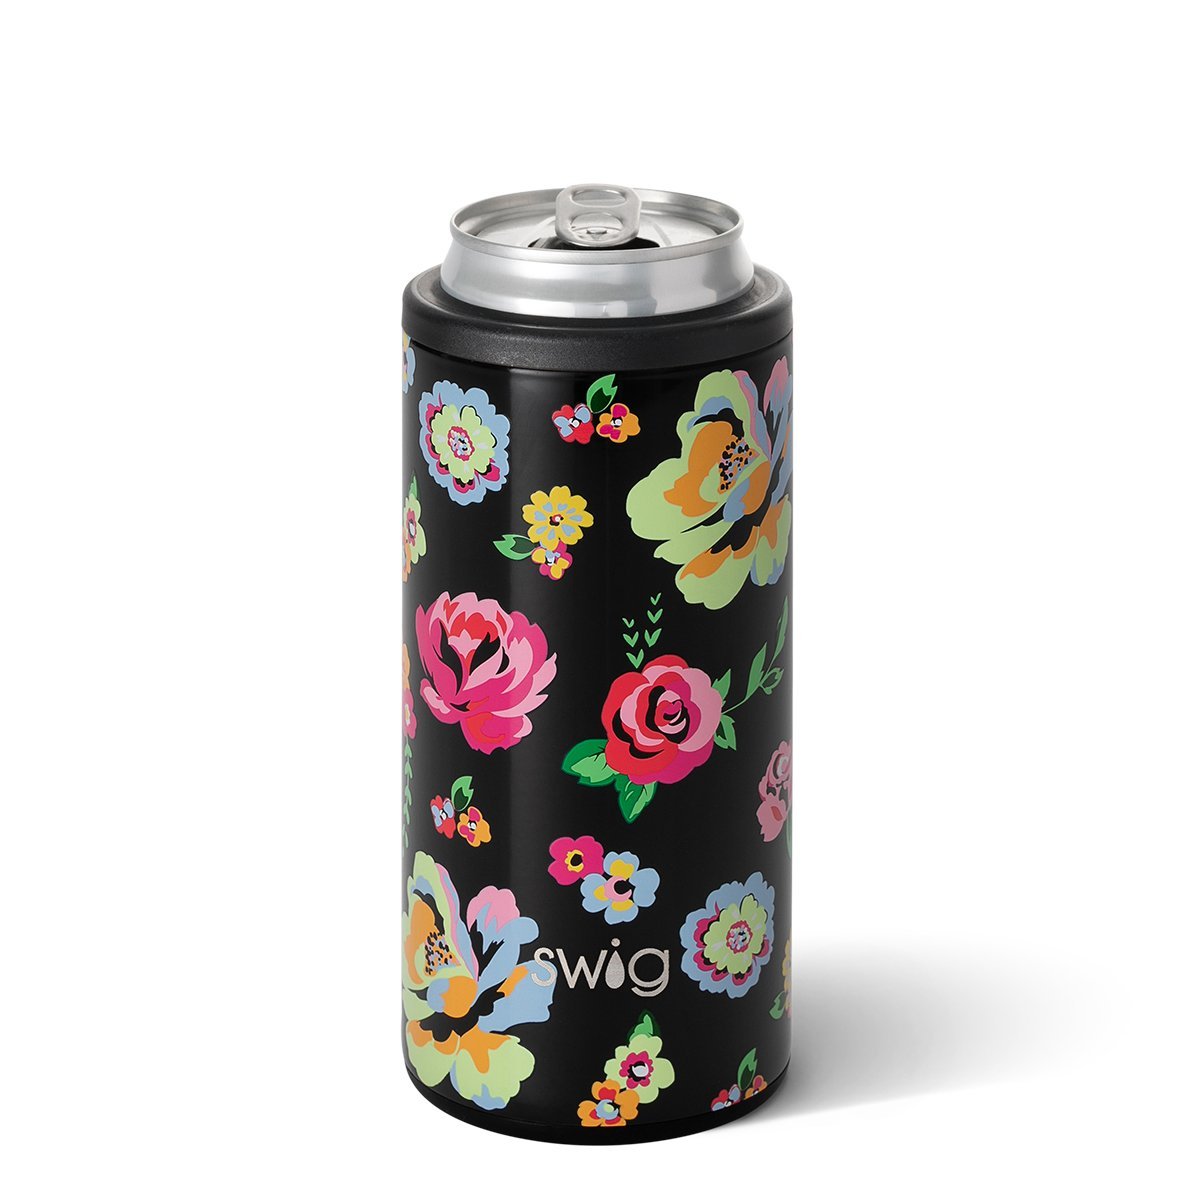 Swig Life 12 oz. Insulated Skinny Can Cooler - Fleur Noir